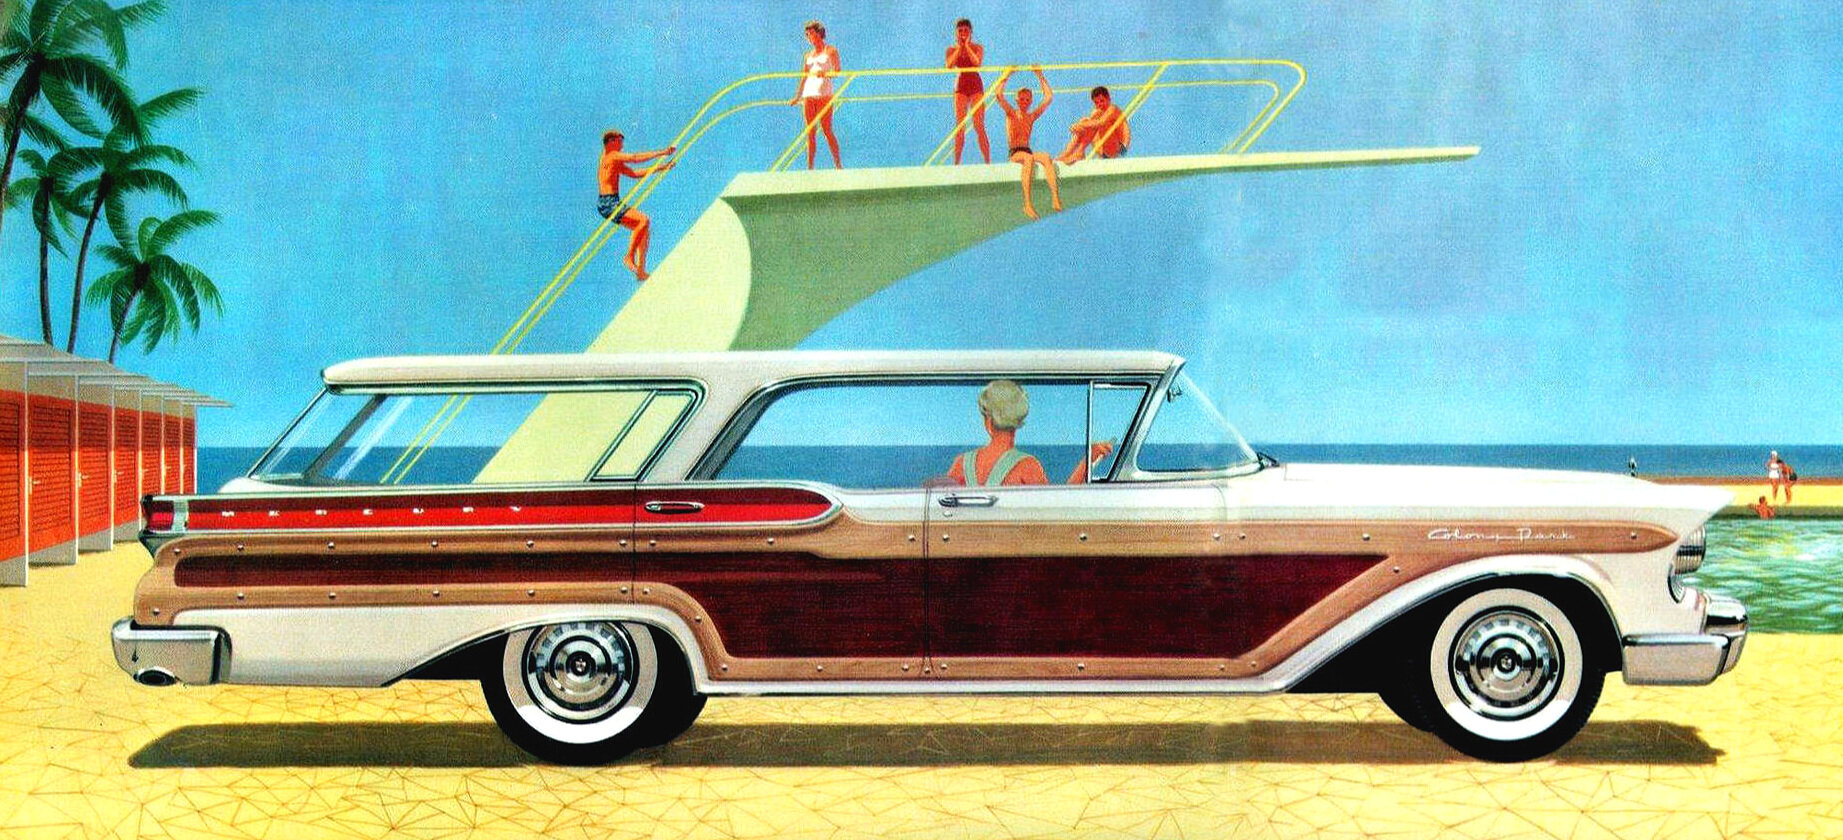 1957 station wagons